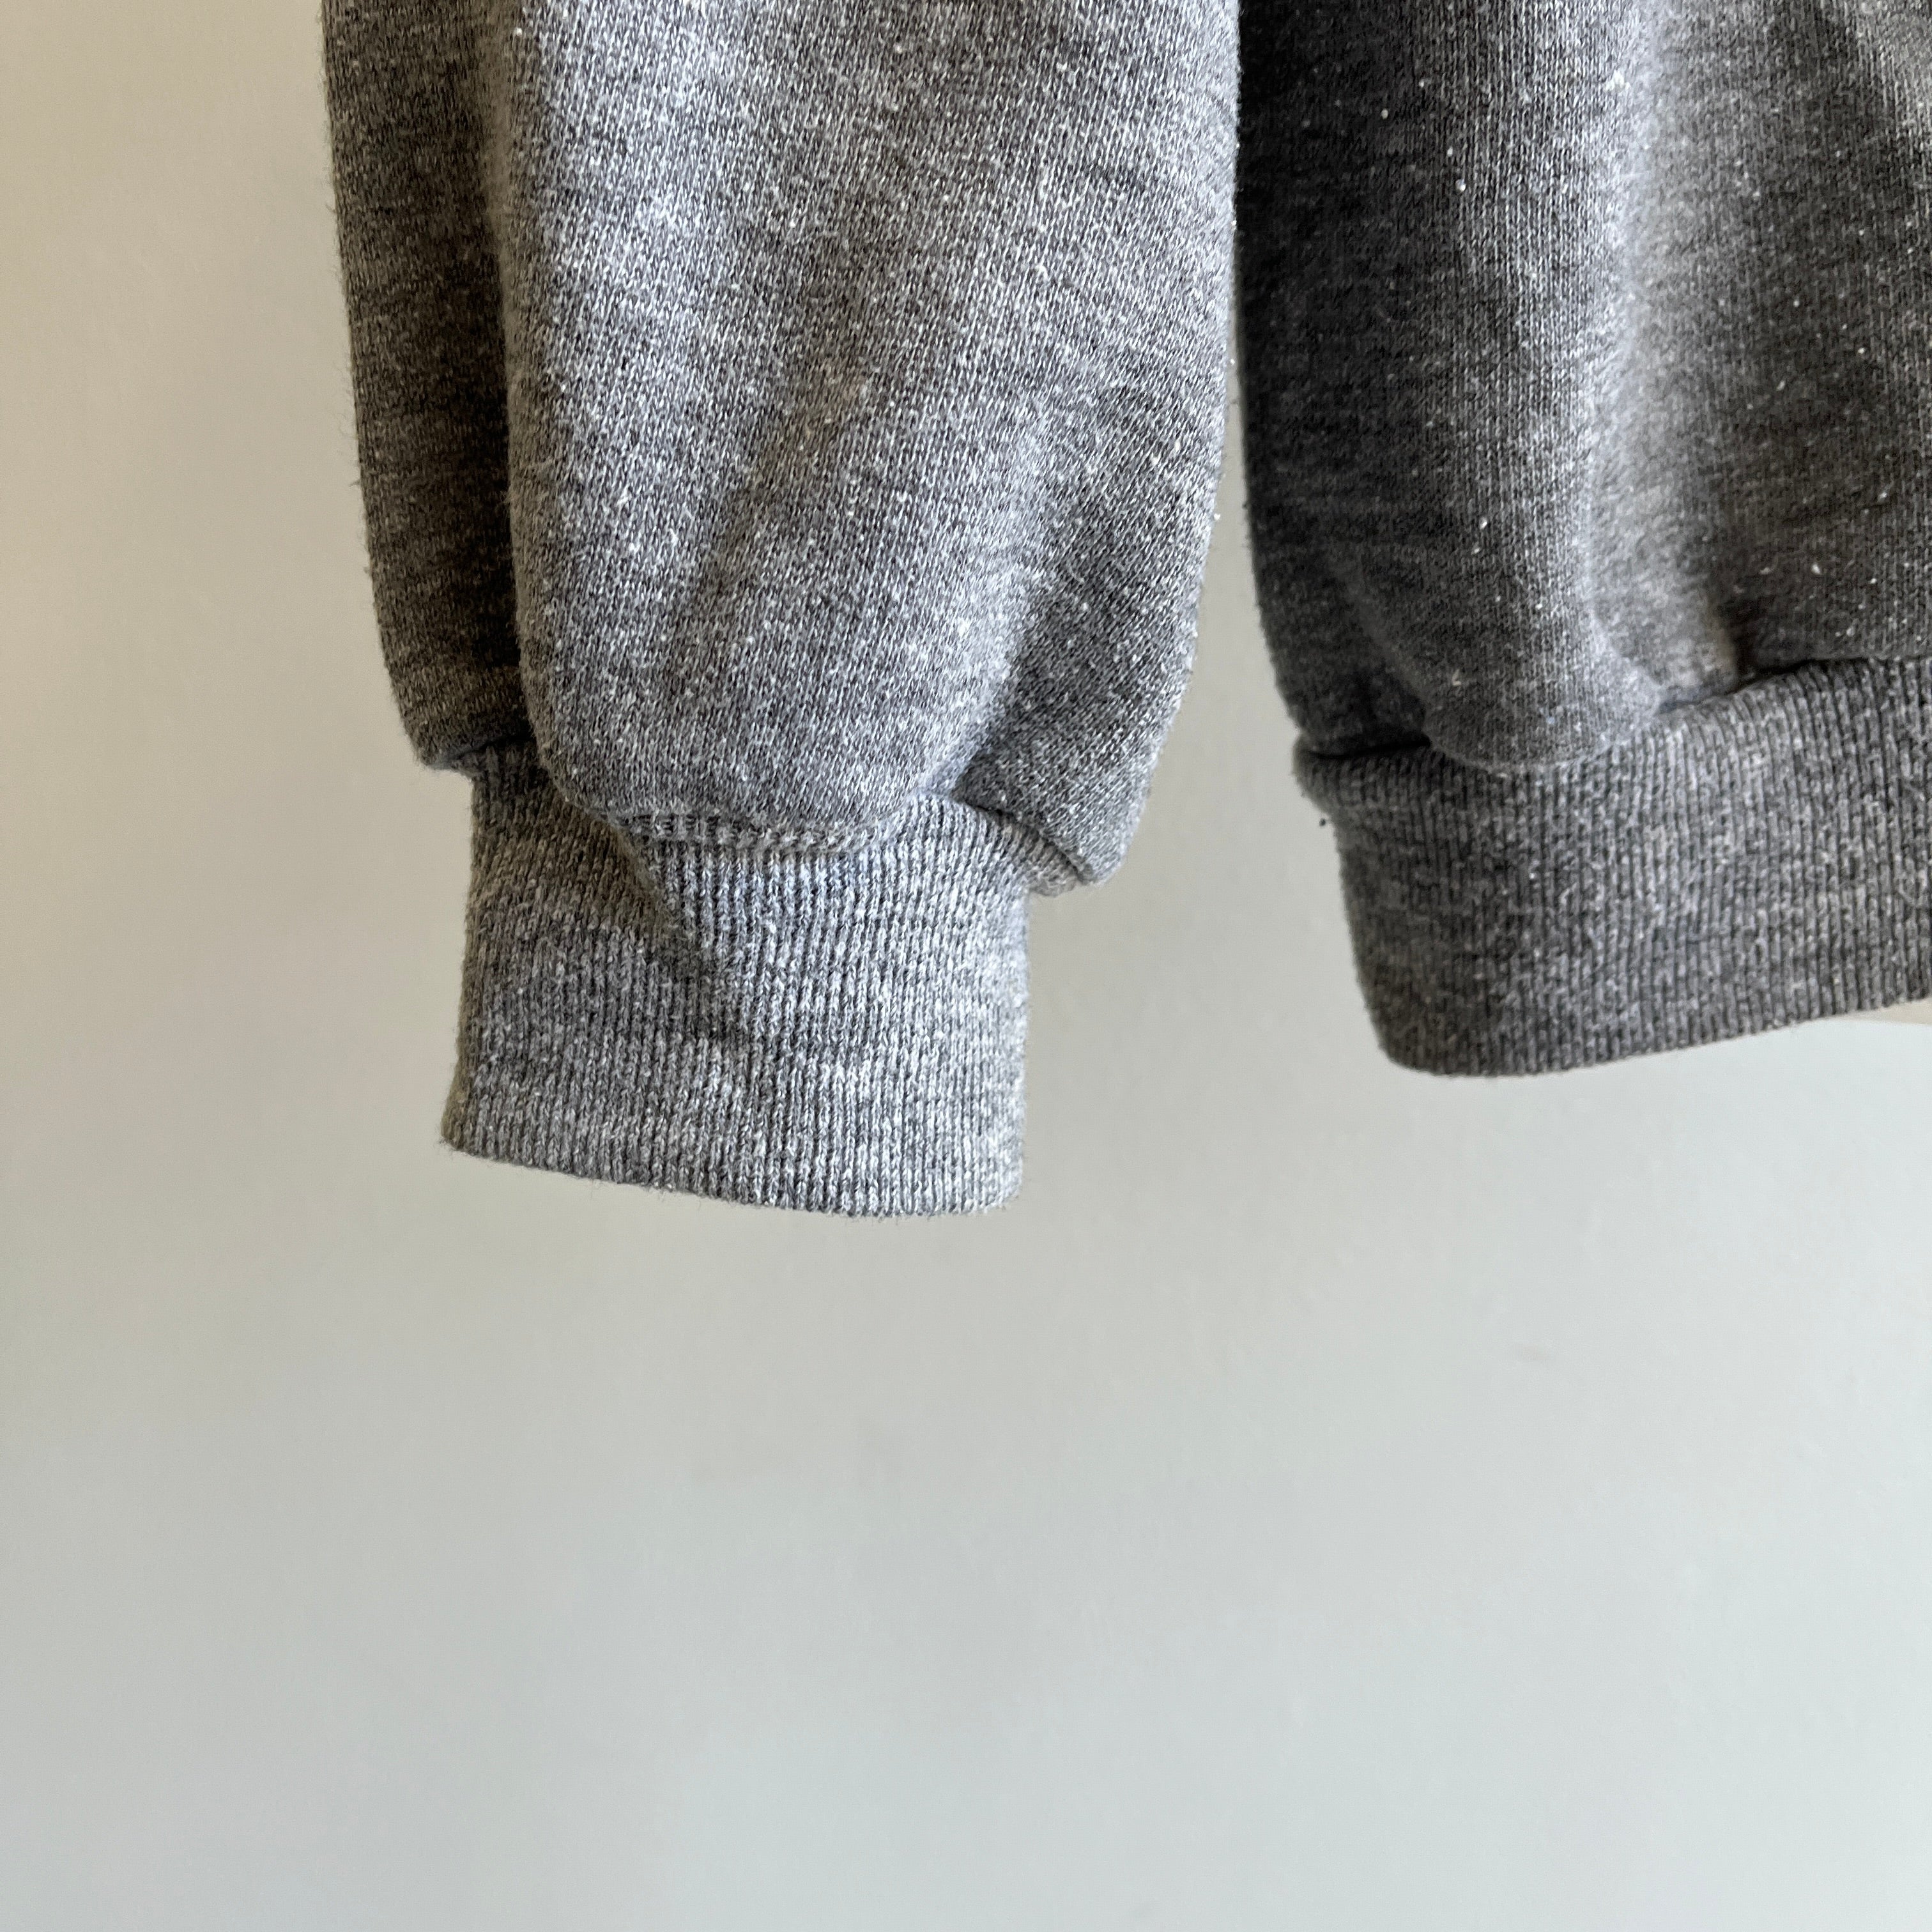 1980s USA Made Dickies Blank Gray Sweatshirt